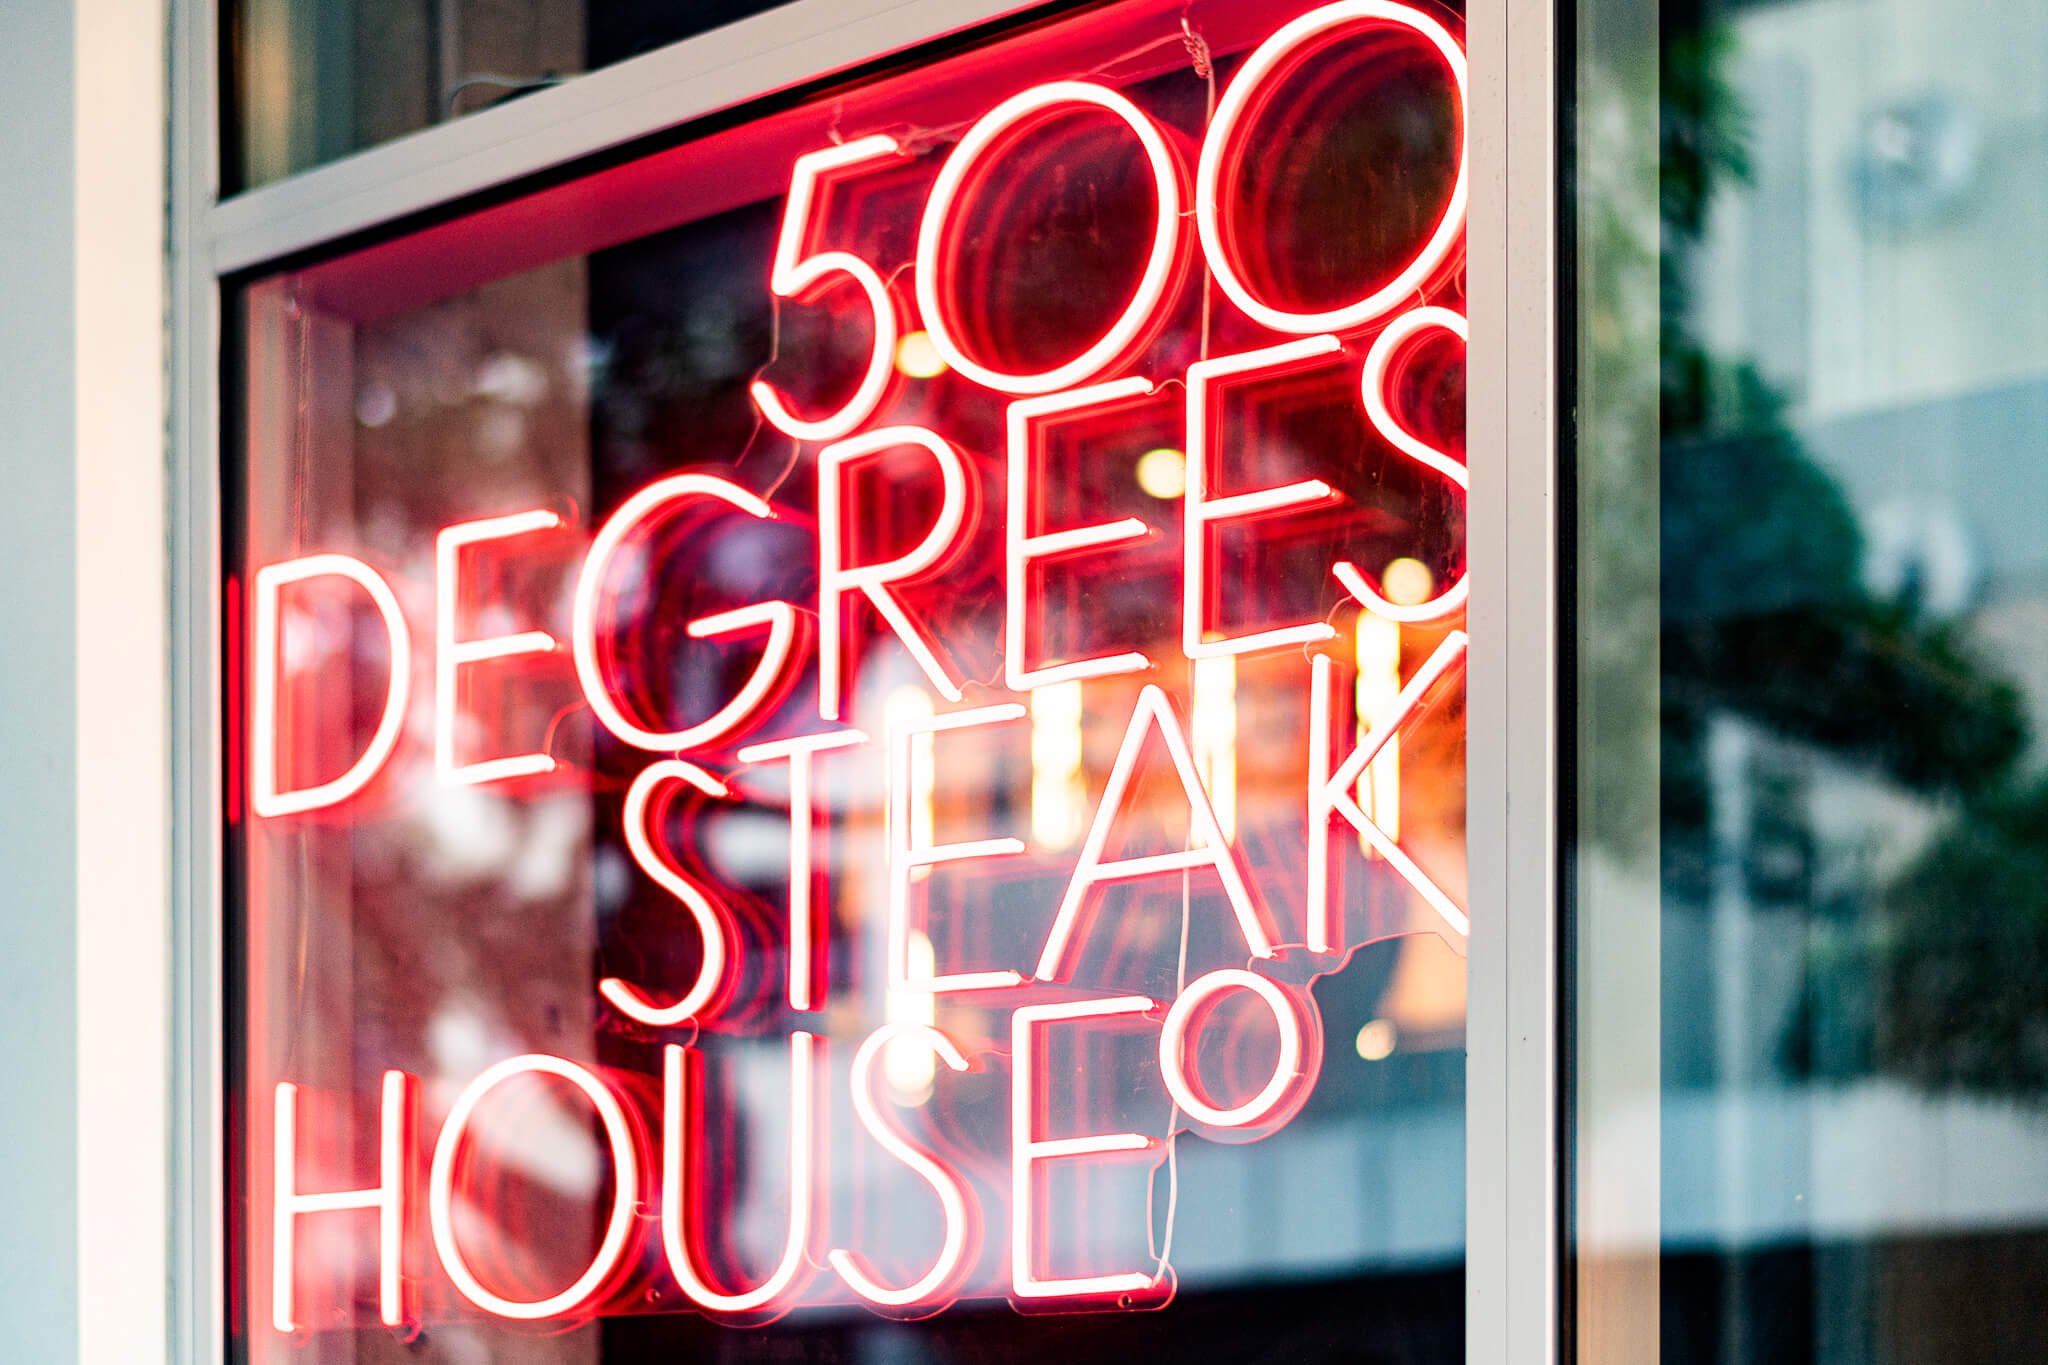 500 Degrees Restaurant and Steakouse Flame Grilled Premium Steak121.jpg